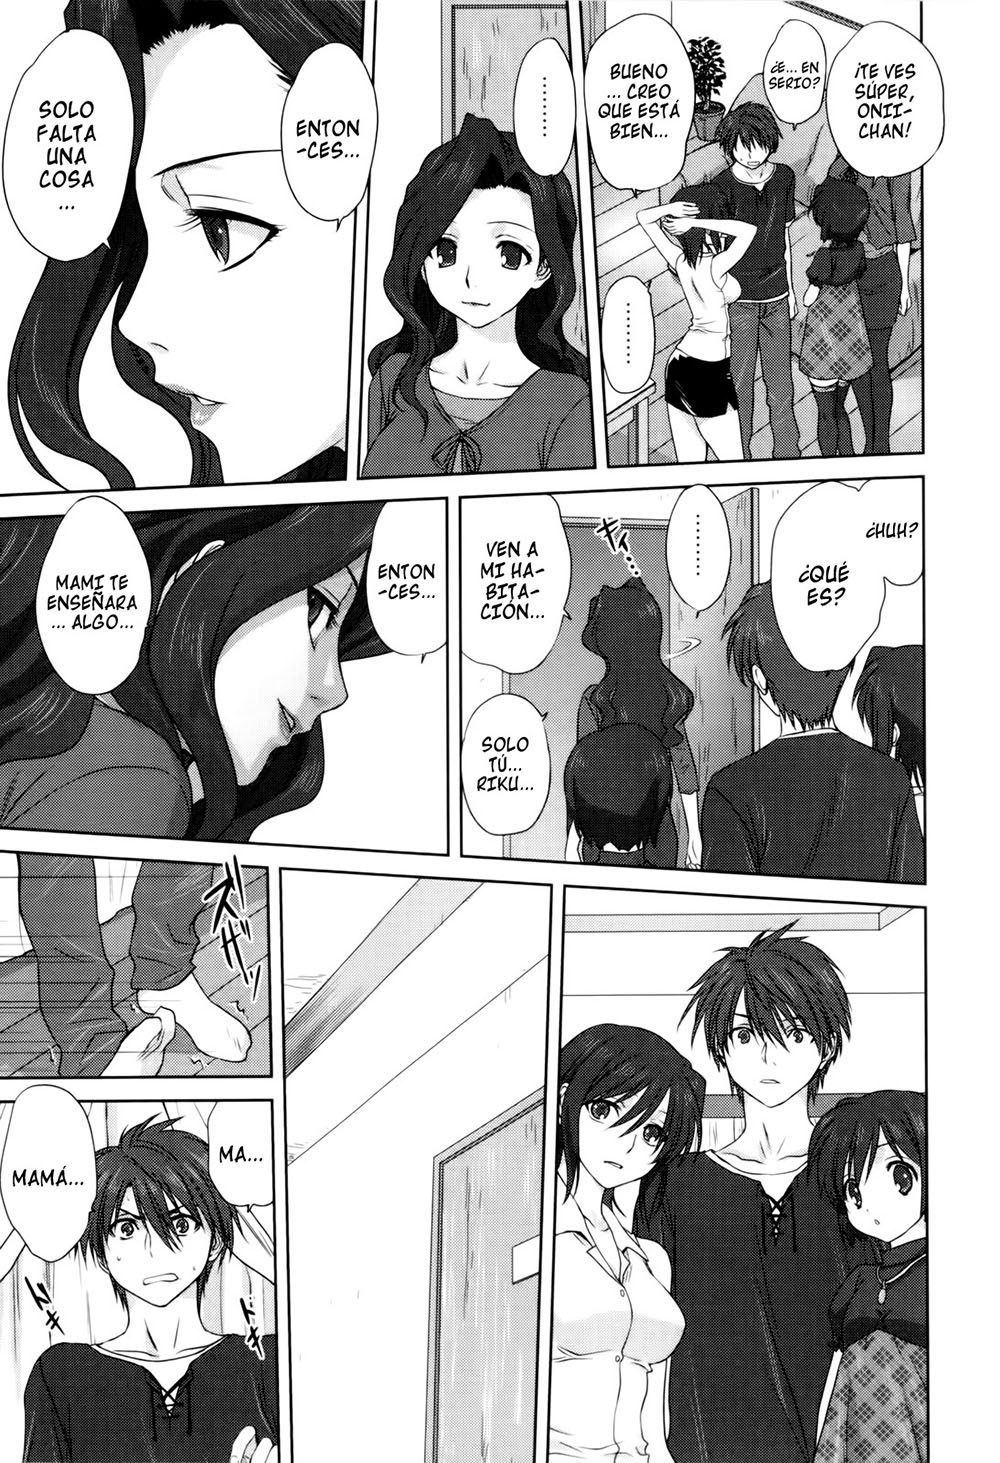 La Familia al Completo #2 - 8 - Comics Porno - Hentai Manga - Cartoon XXX